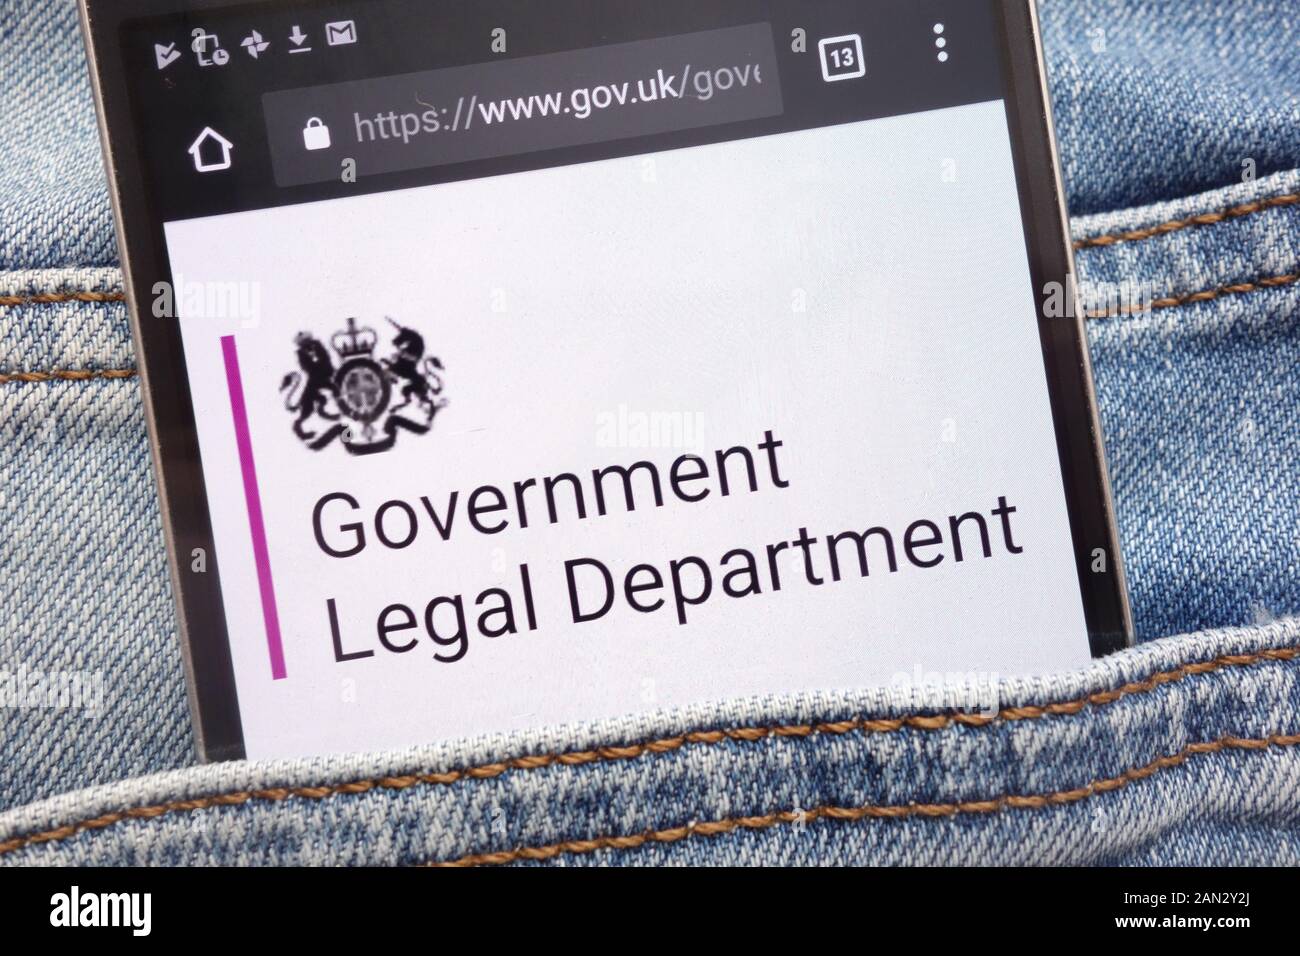 Gov.uk website displayed on smartphone hidden in jeans pocket Stock Photo